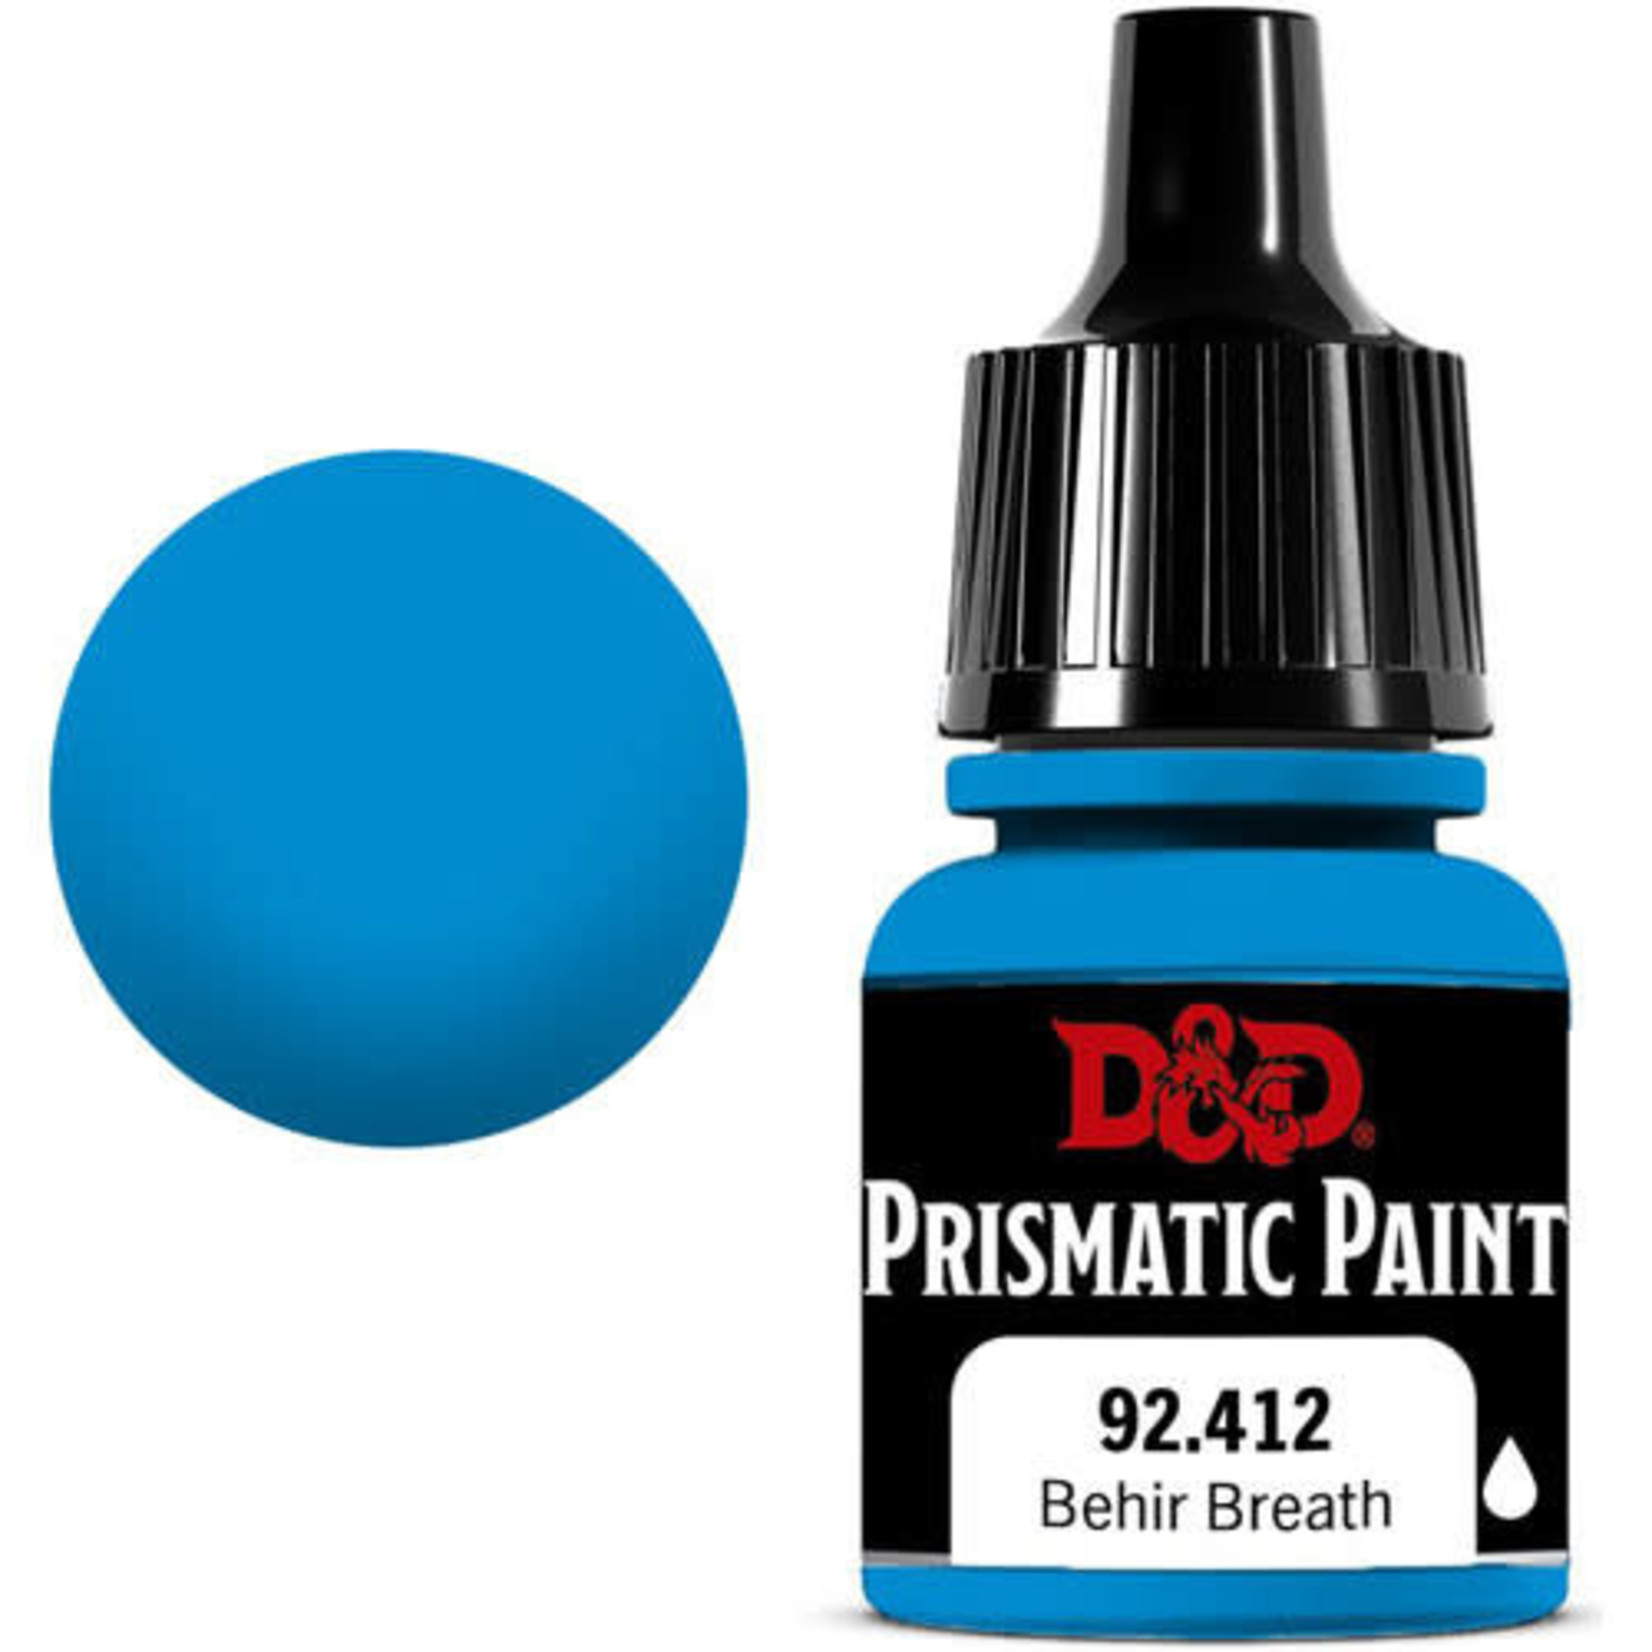 WIZKIDS/NECA D&D Prismatic Paint: Behir Breath 92.412